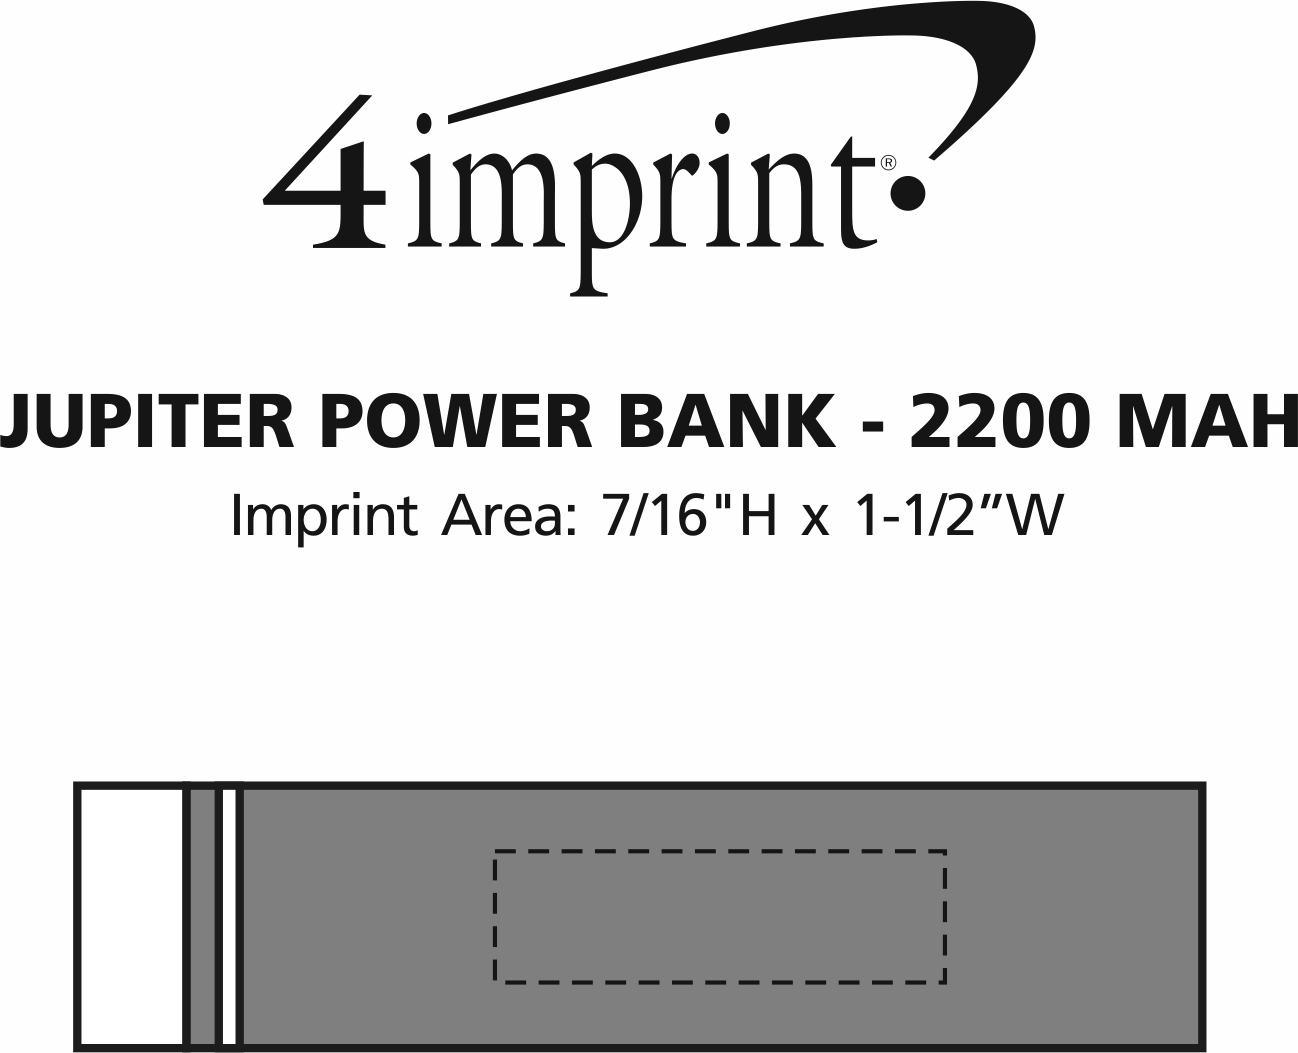 Imprint Area of Jupiter Power Bank - 2200 mAh